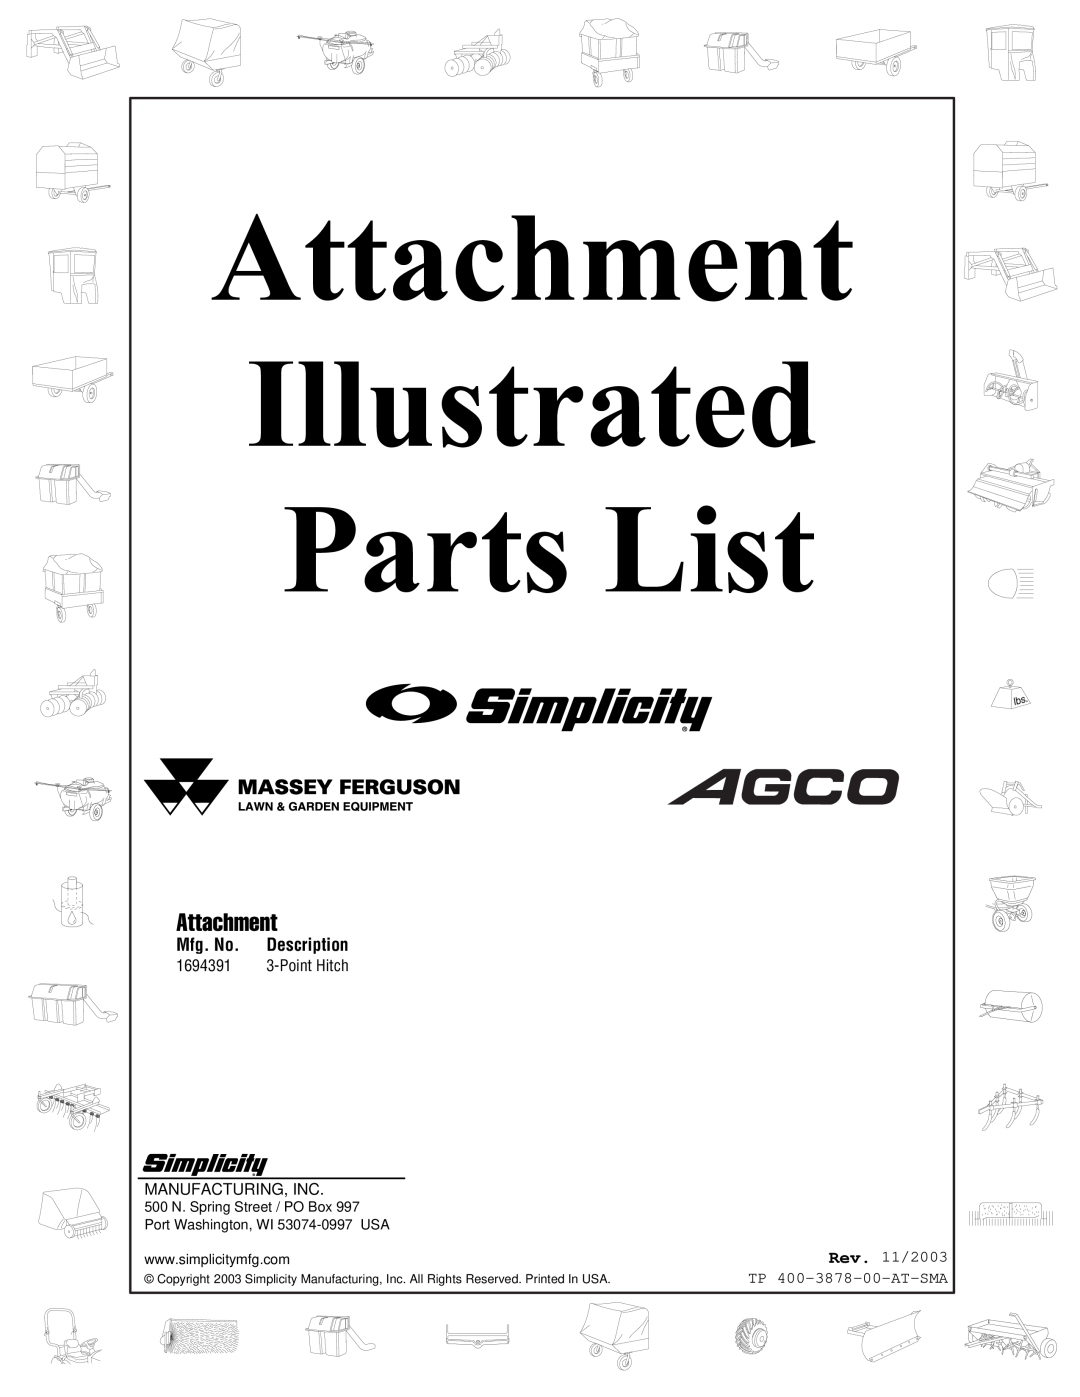 Simplicity 1694391 manual Mfg. No. Description, Rev. 11/2003, TP 400-3878-00-AT-SMA, Attachment Illustrated Parts List 